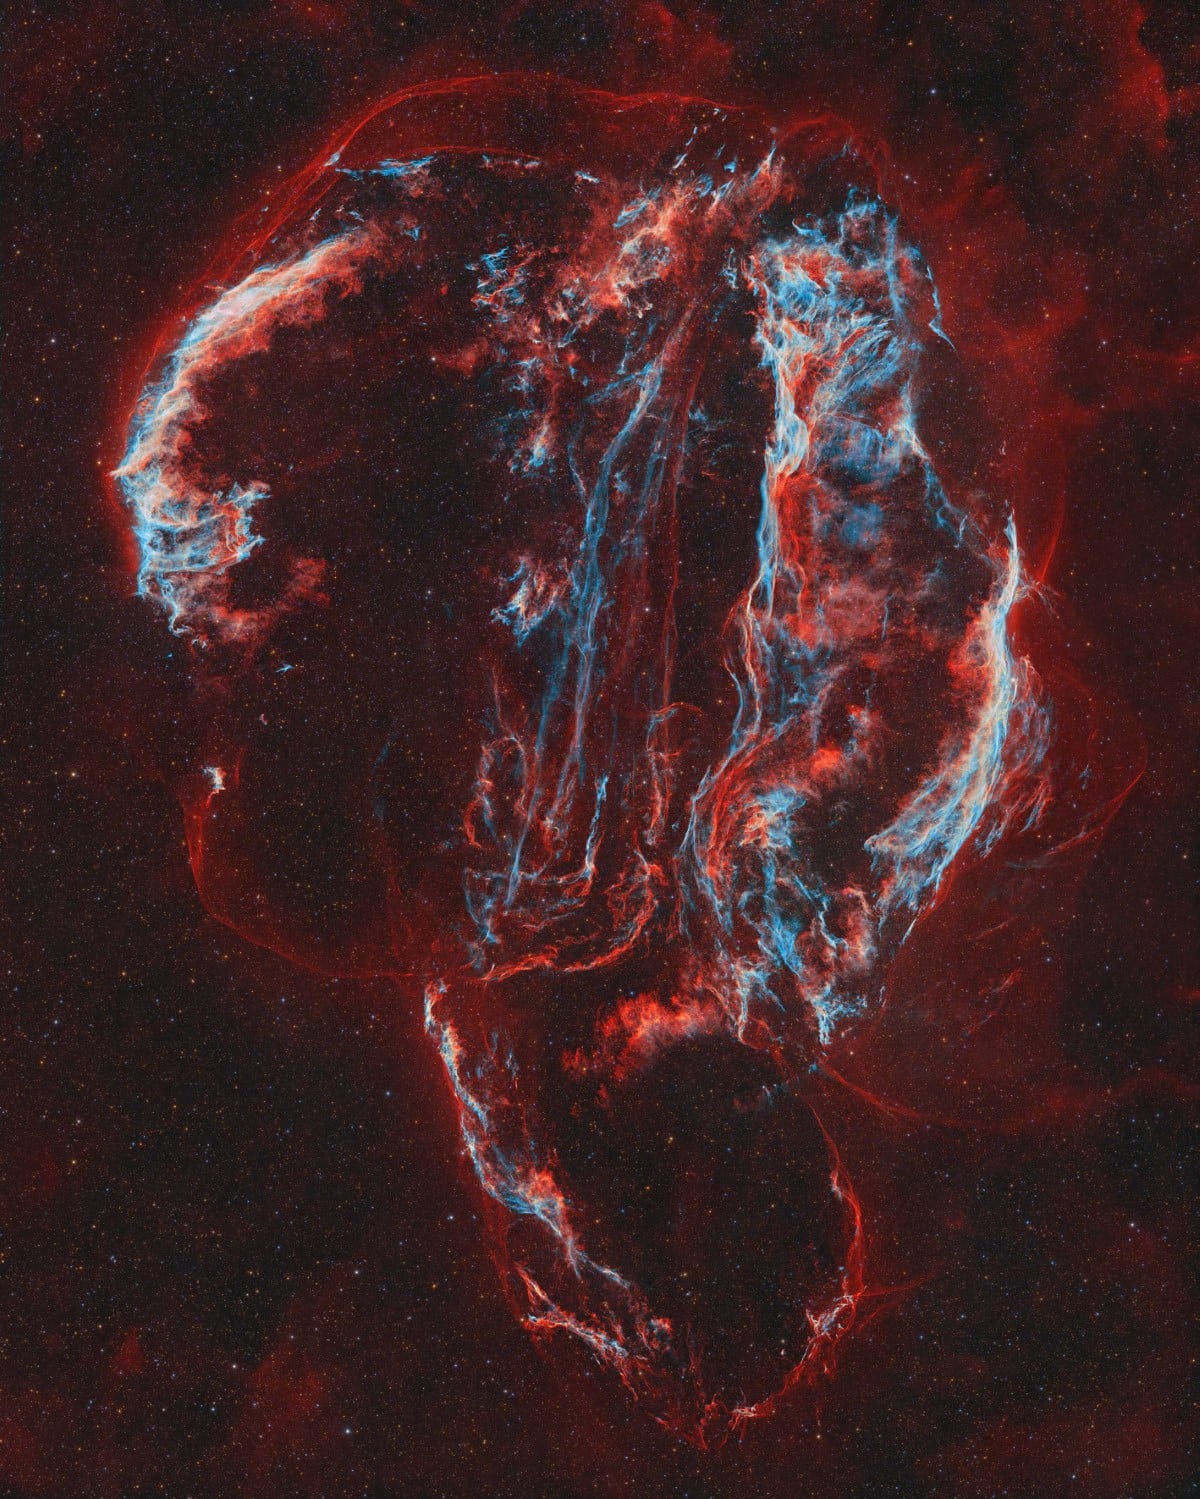 Cygnus supernova afterglow